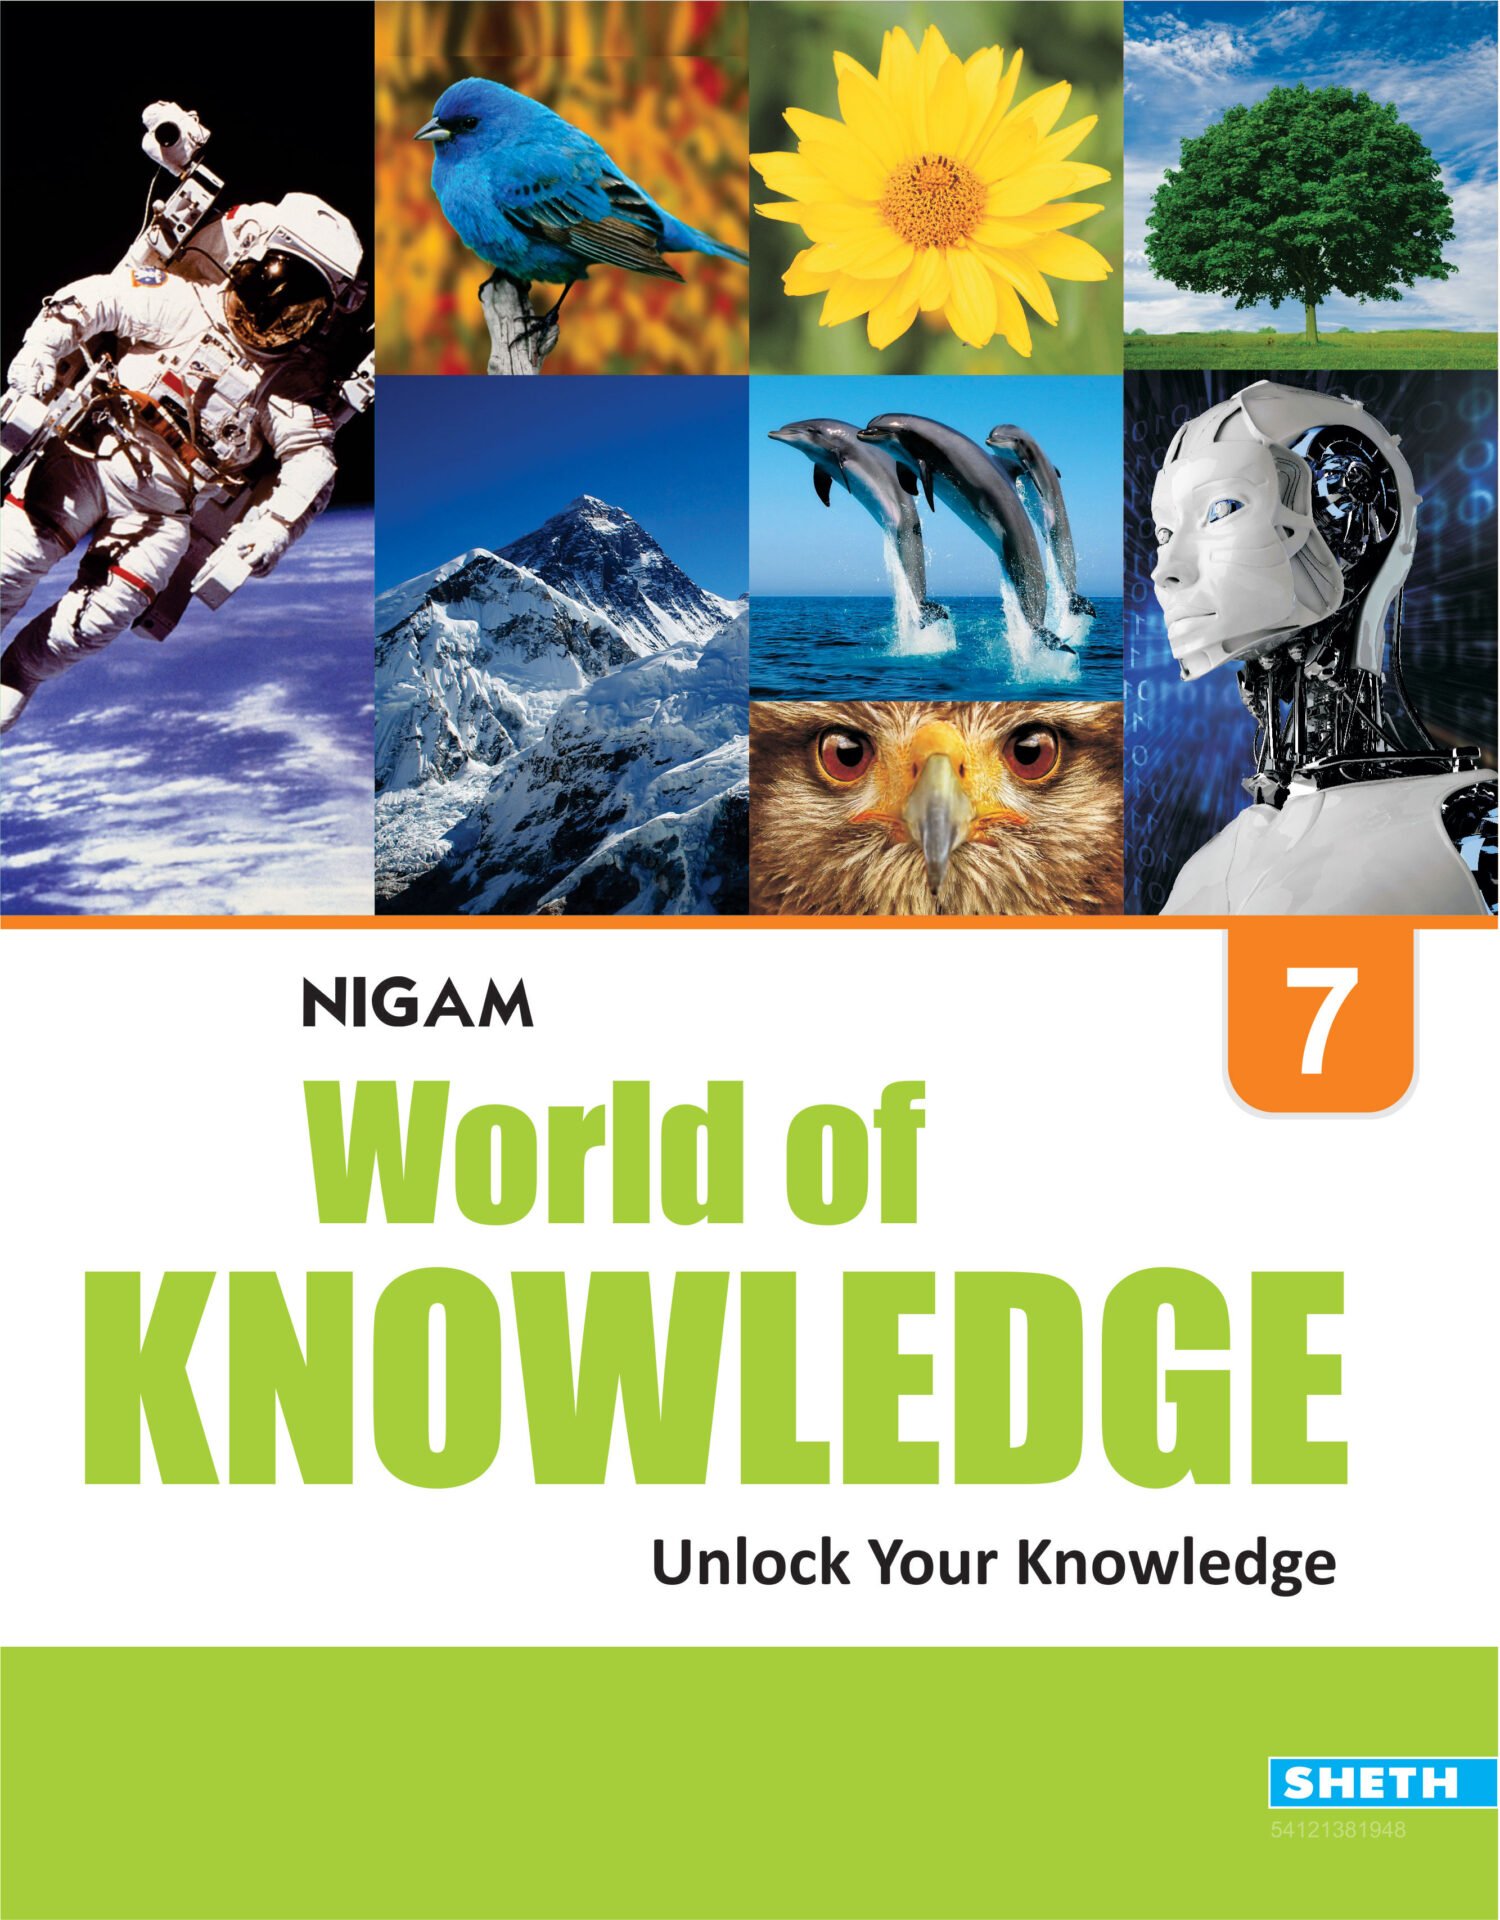 Nigam World of Knowledge 7 1 1